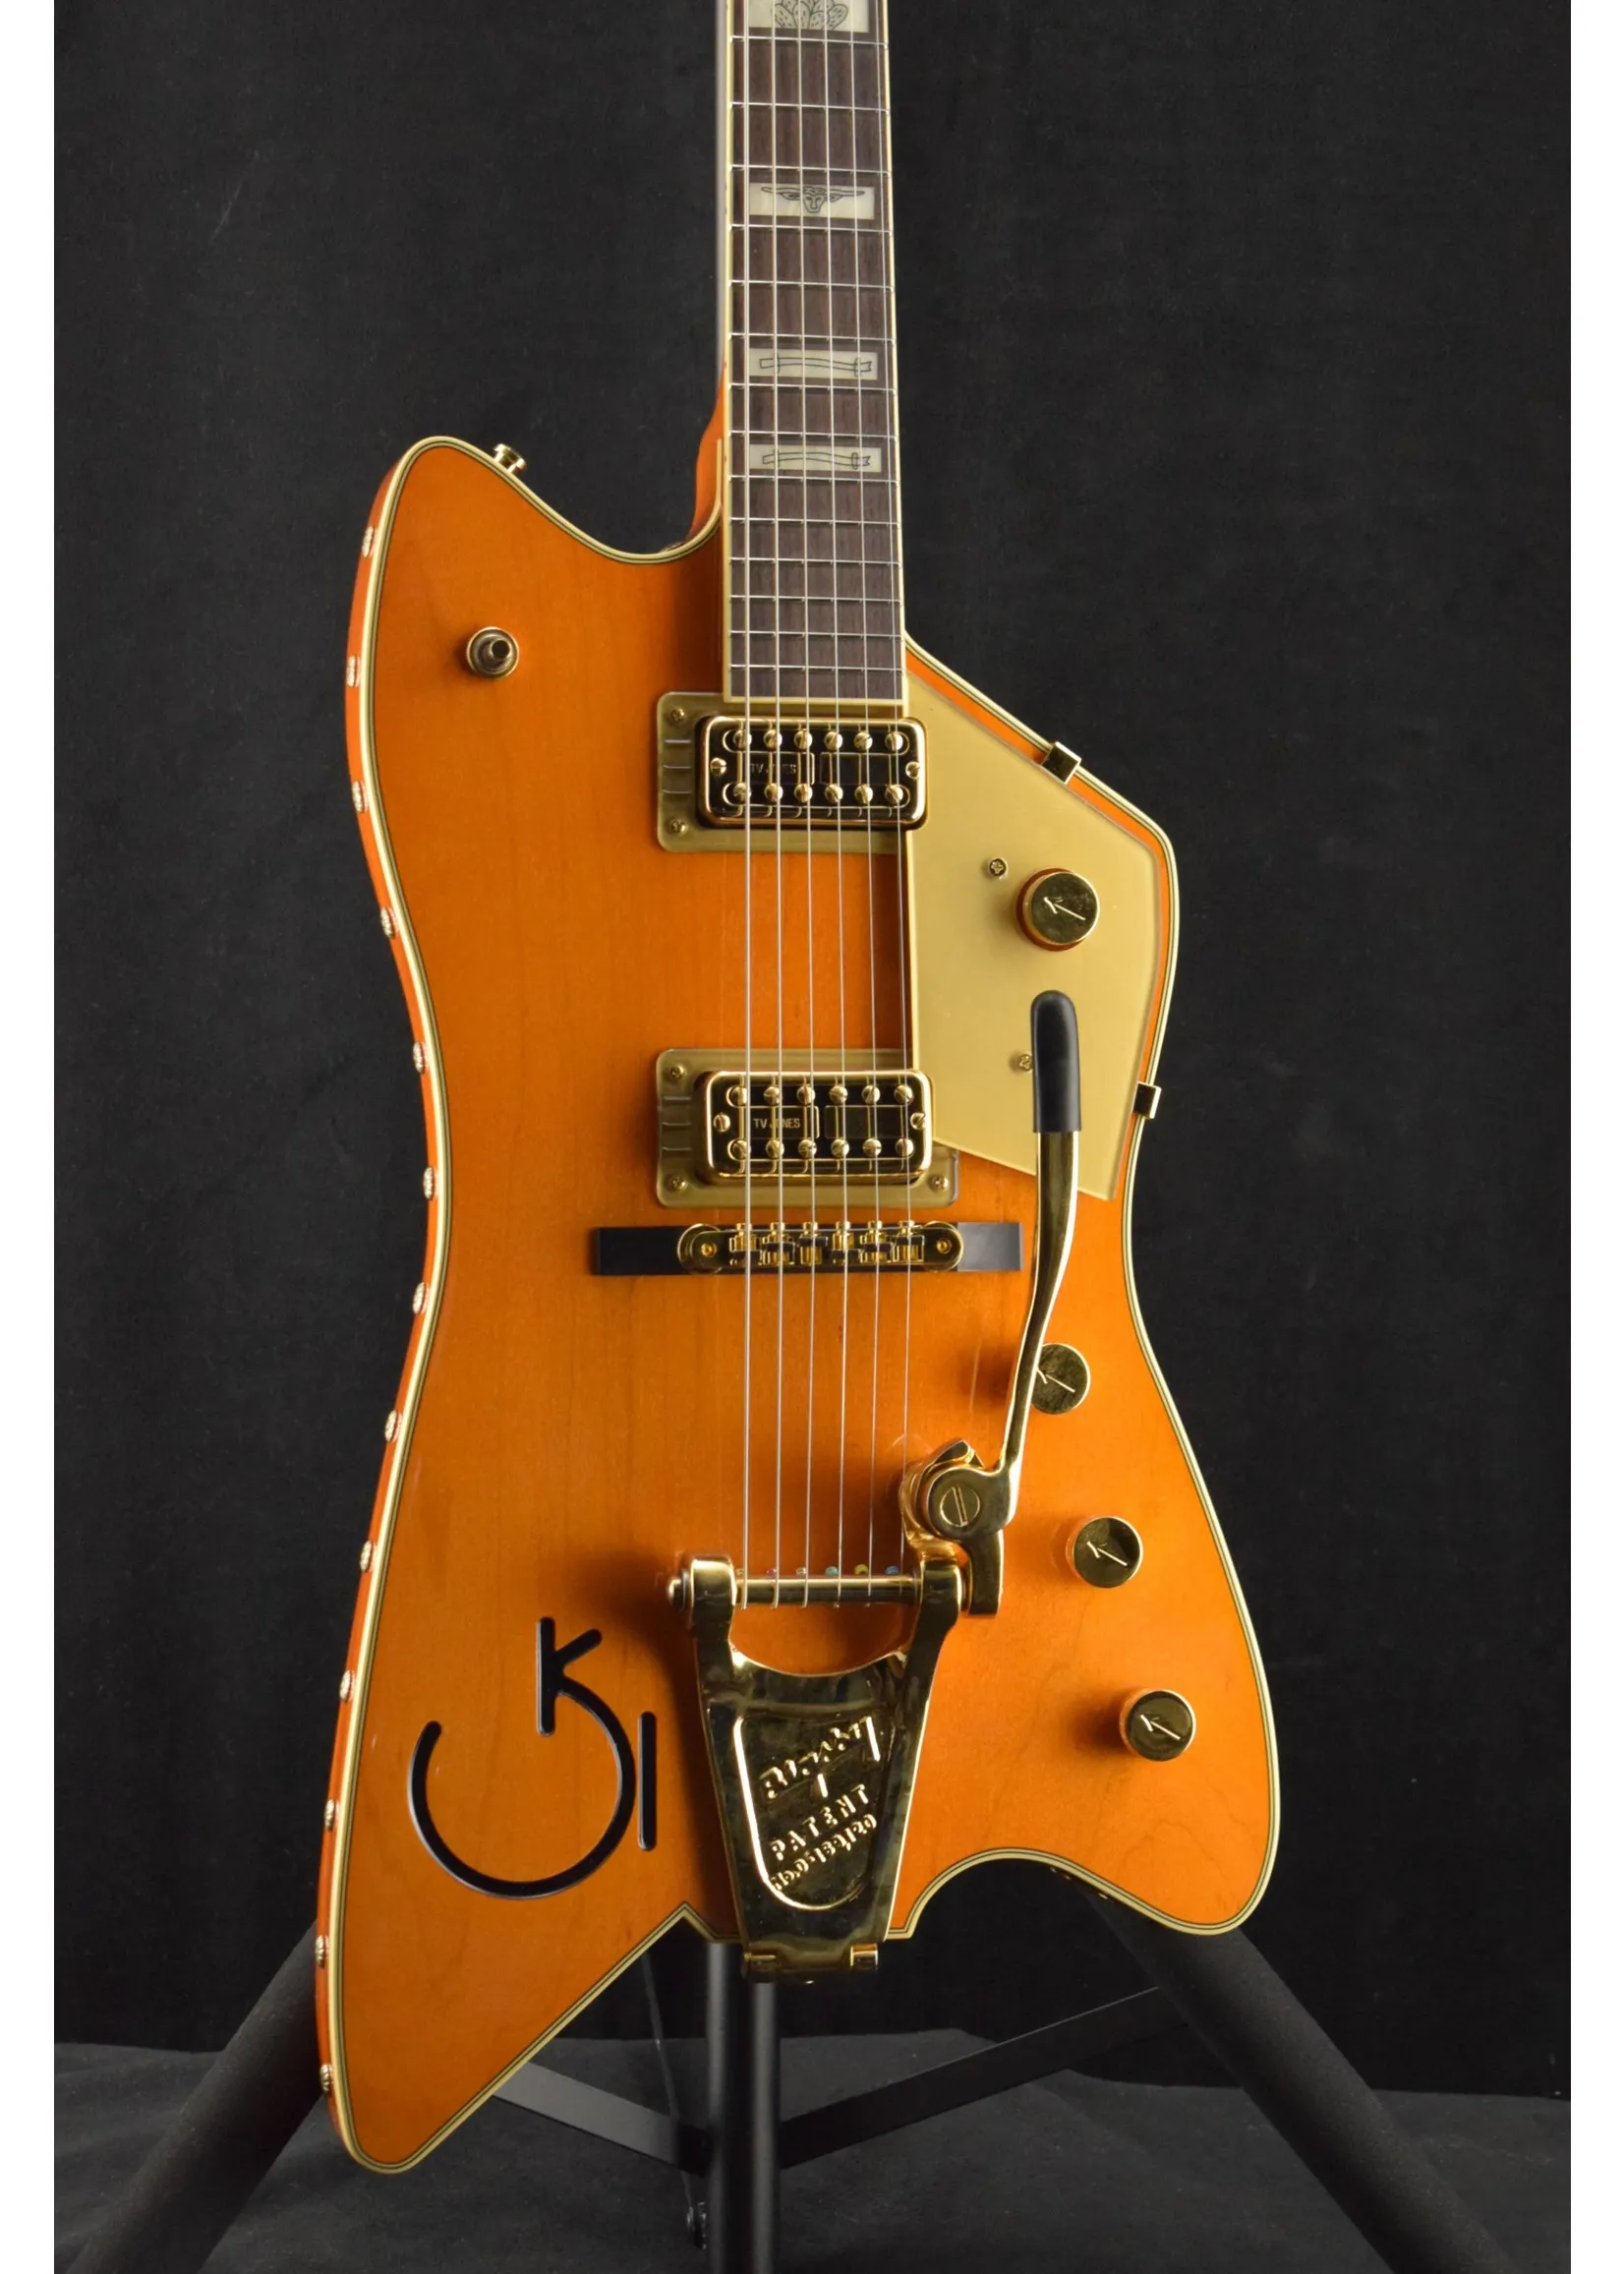 6199tw Billy Bo Jupiter Fire Thunderbird Western Orange Electric Guitar Steer Head Staket Pearloid Inlägg, Bigs Tremolo Bridge, Gold Sparkle Pickguard